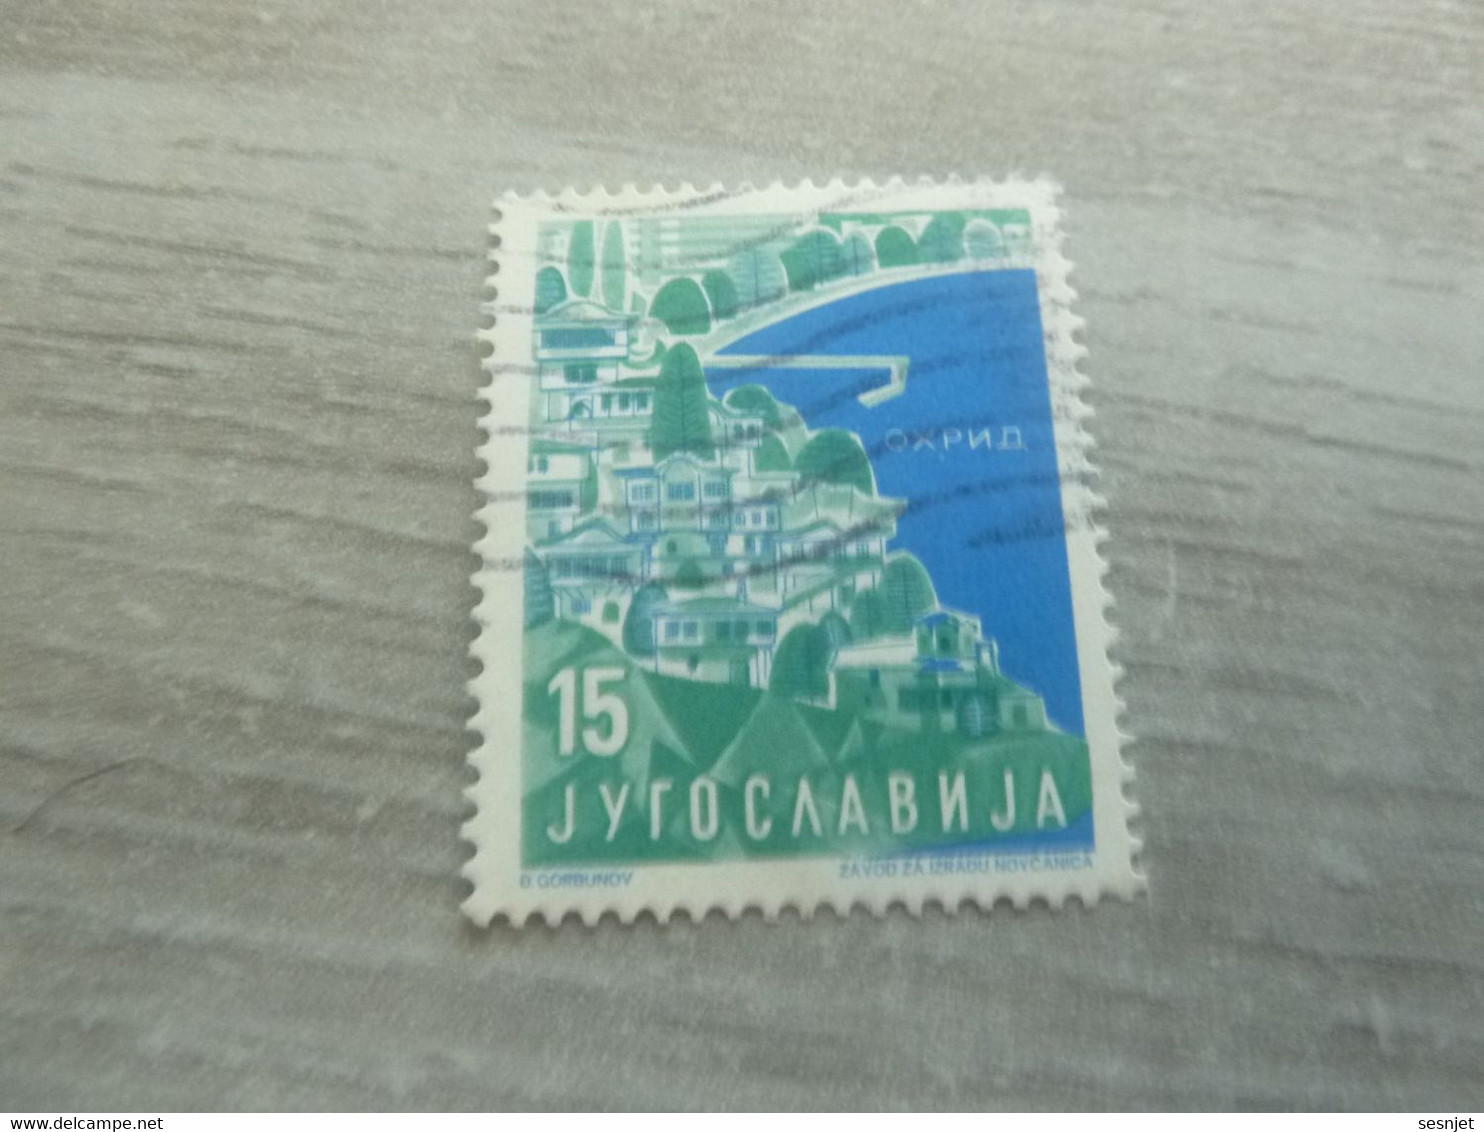 Jyrocaabnja - Oxpno - Corbunov - Val 15 - Gris, Bleu Et Vert - Oblitéré - - Gebruikt